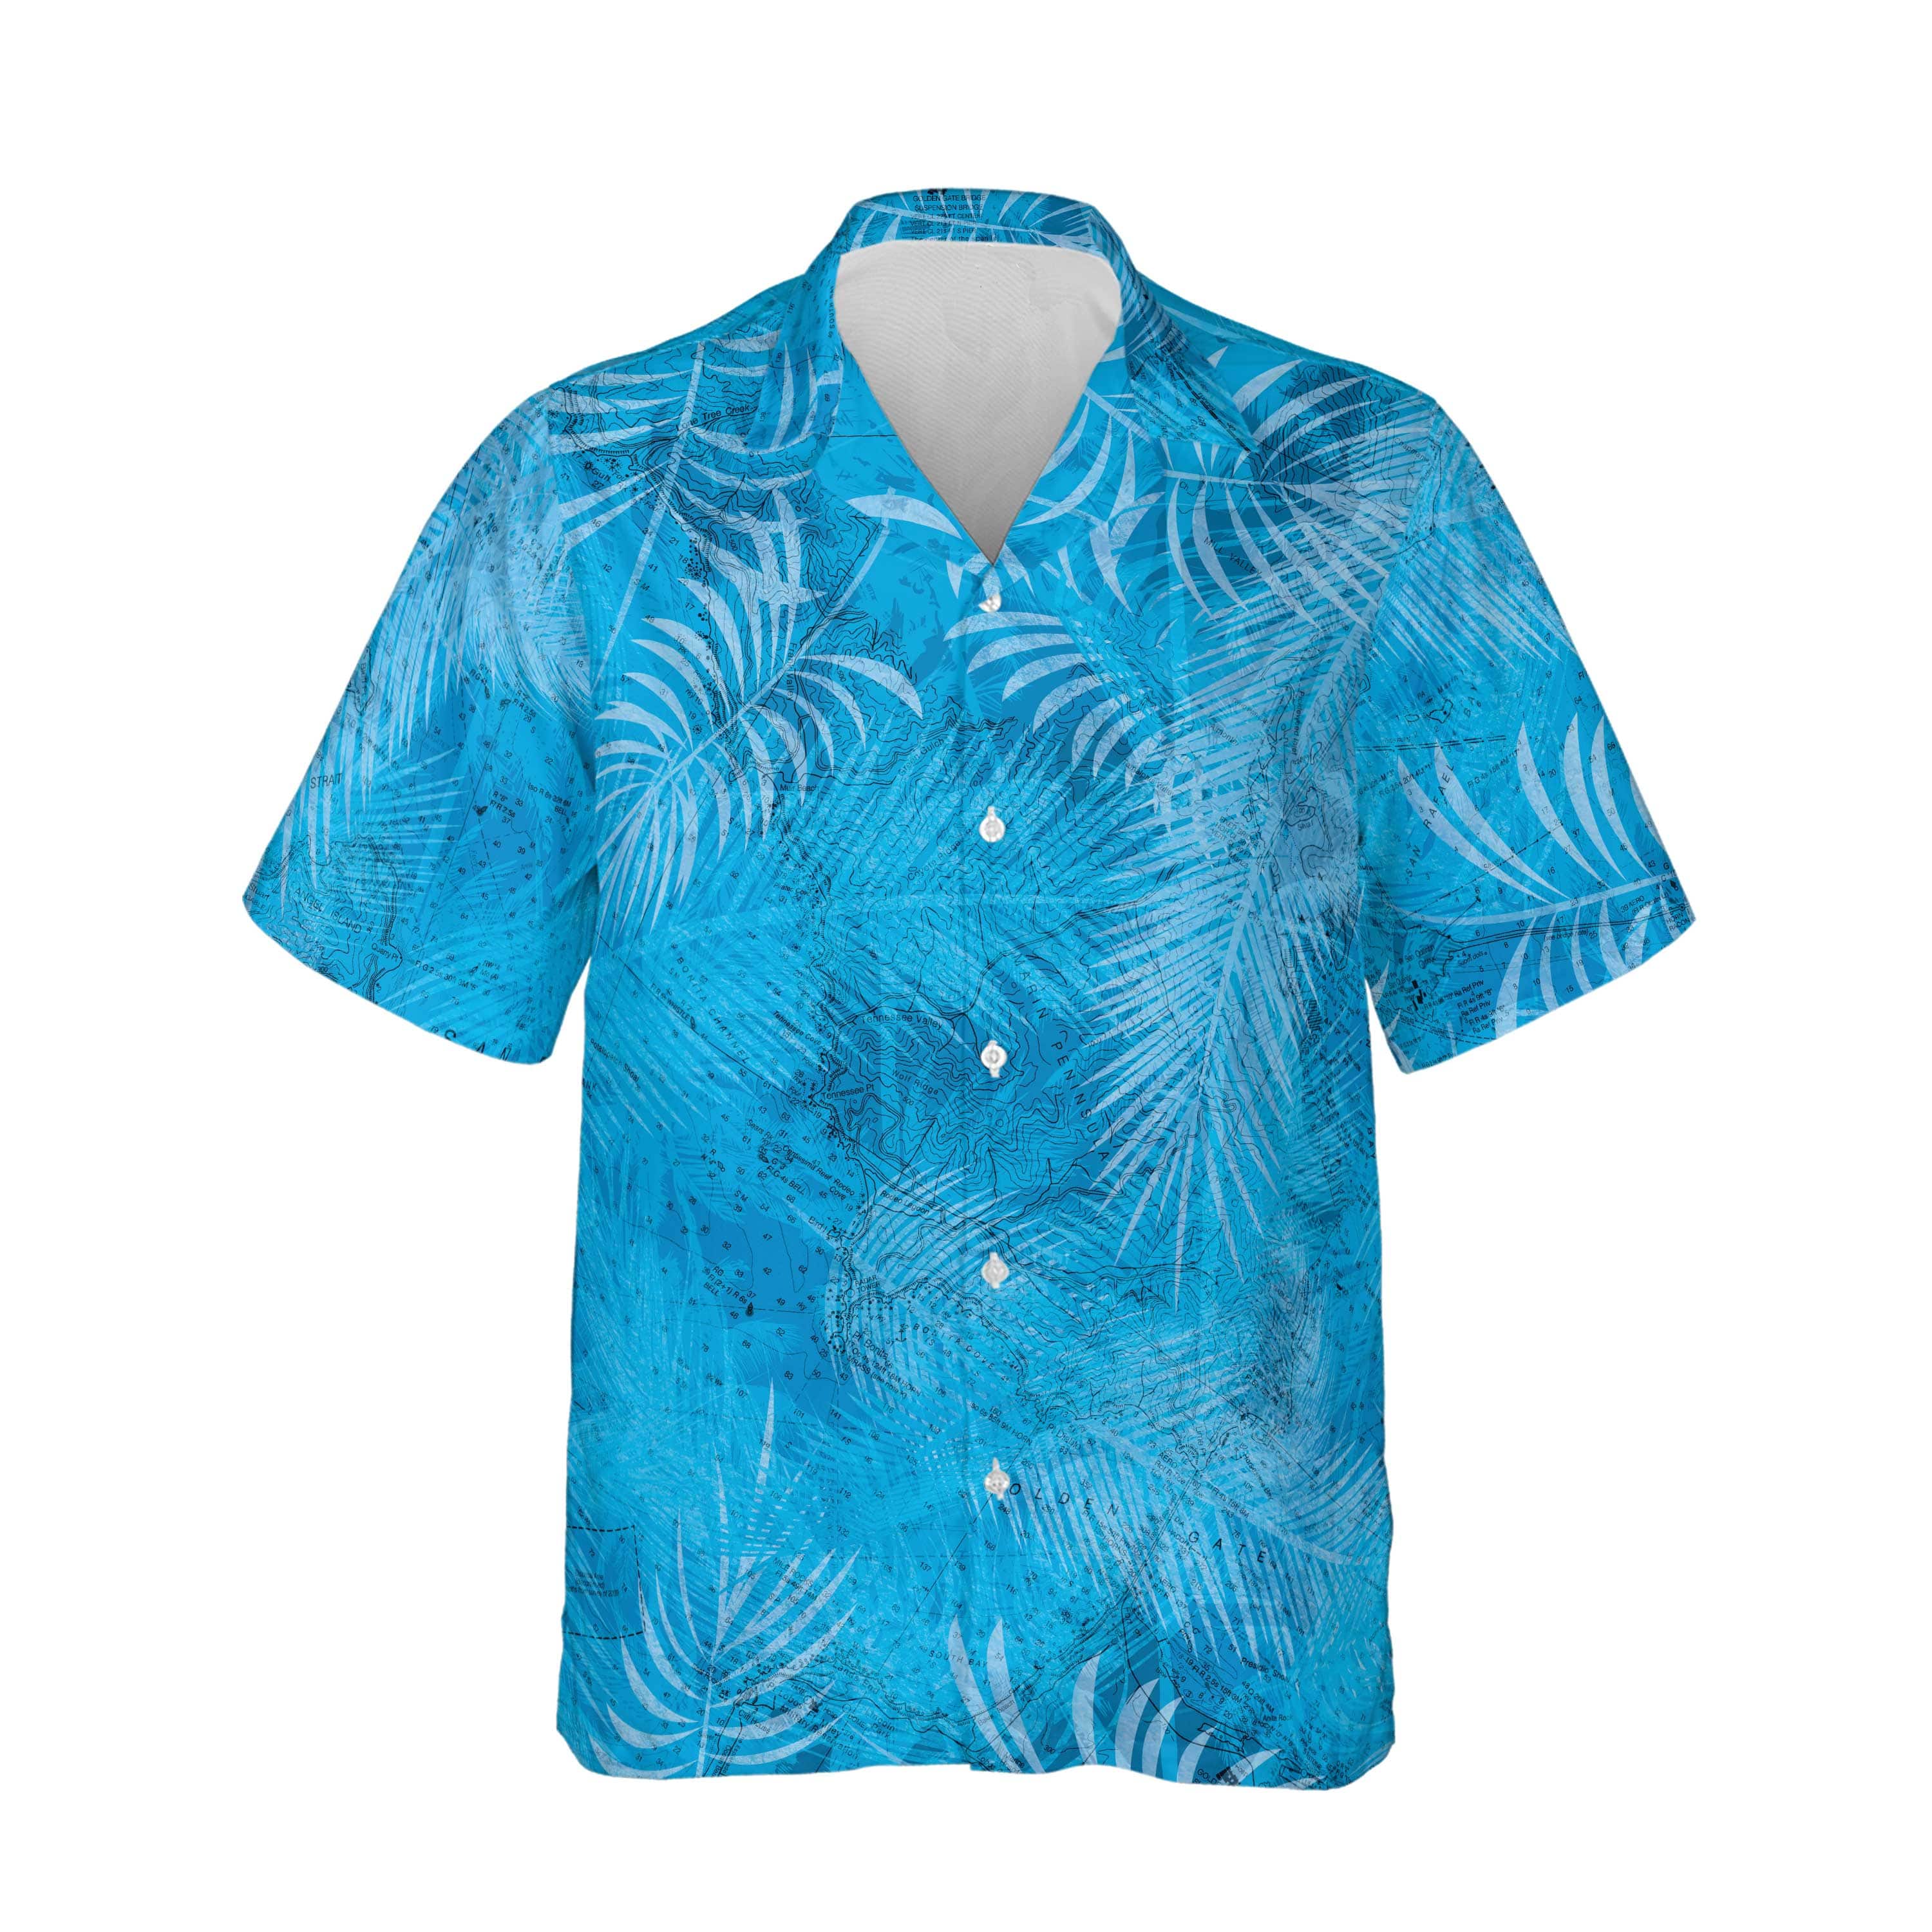 The San Francisco Bay Tropical Blue Shirt